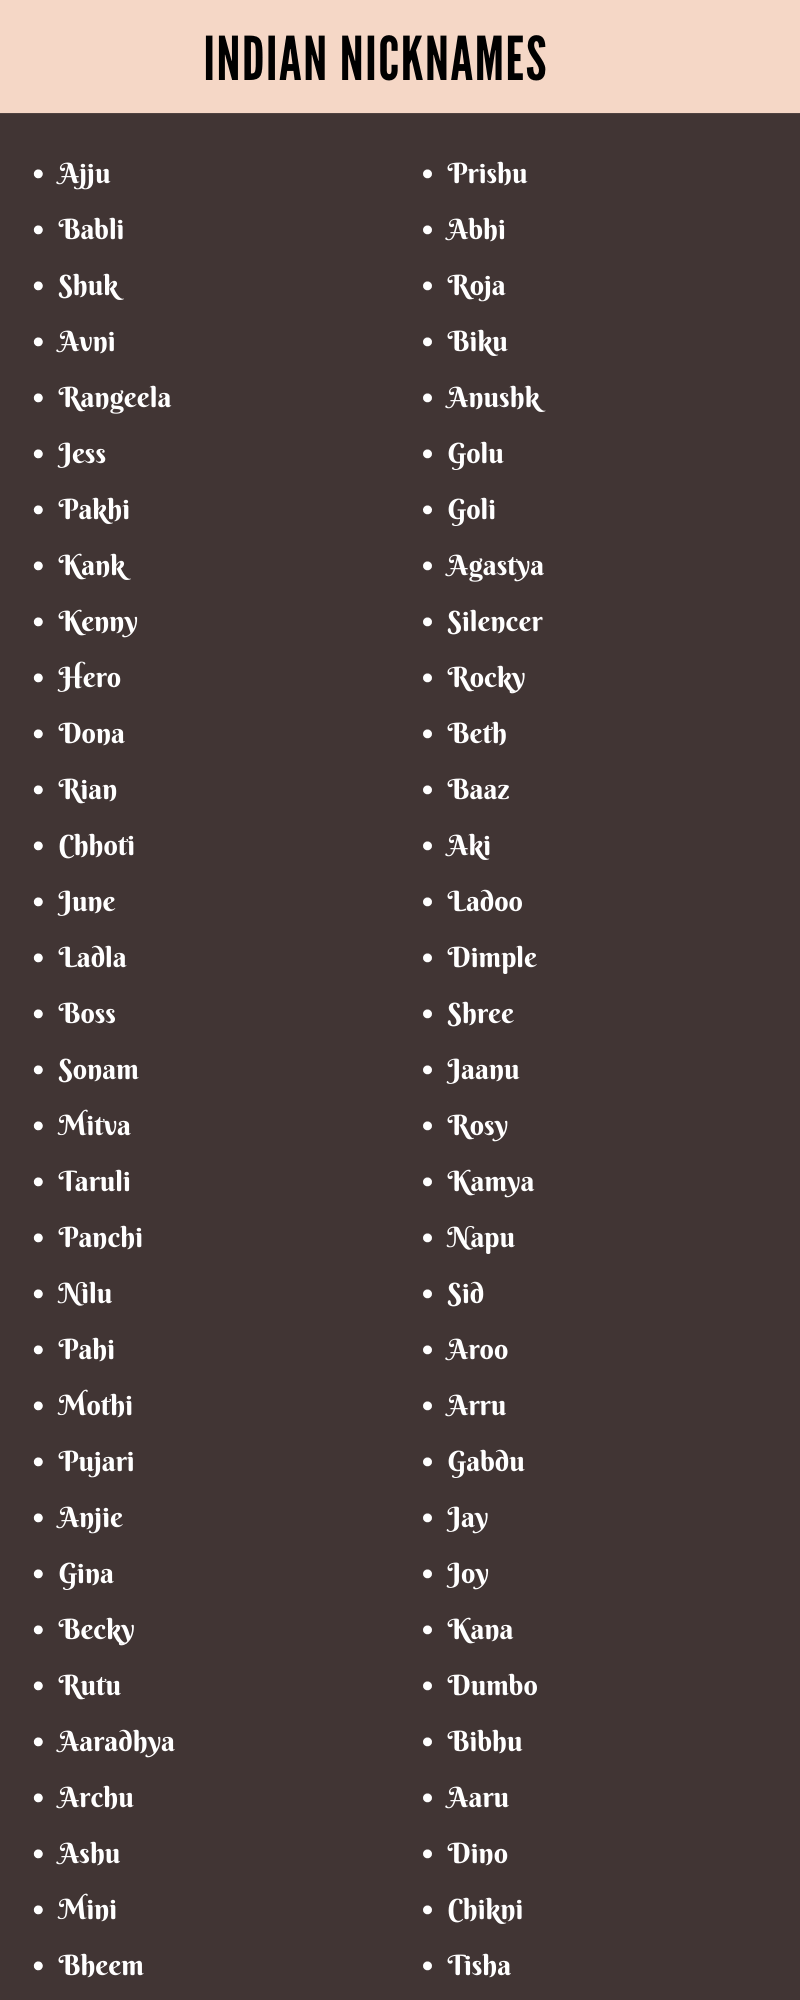 Indian Nicknames: 200+ Adorable and Funny Nicknames